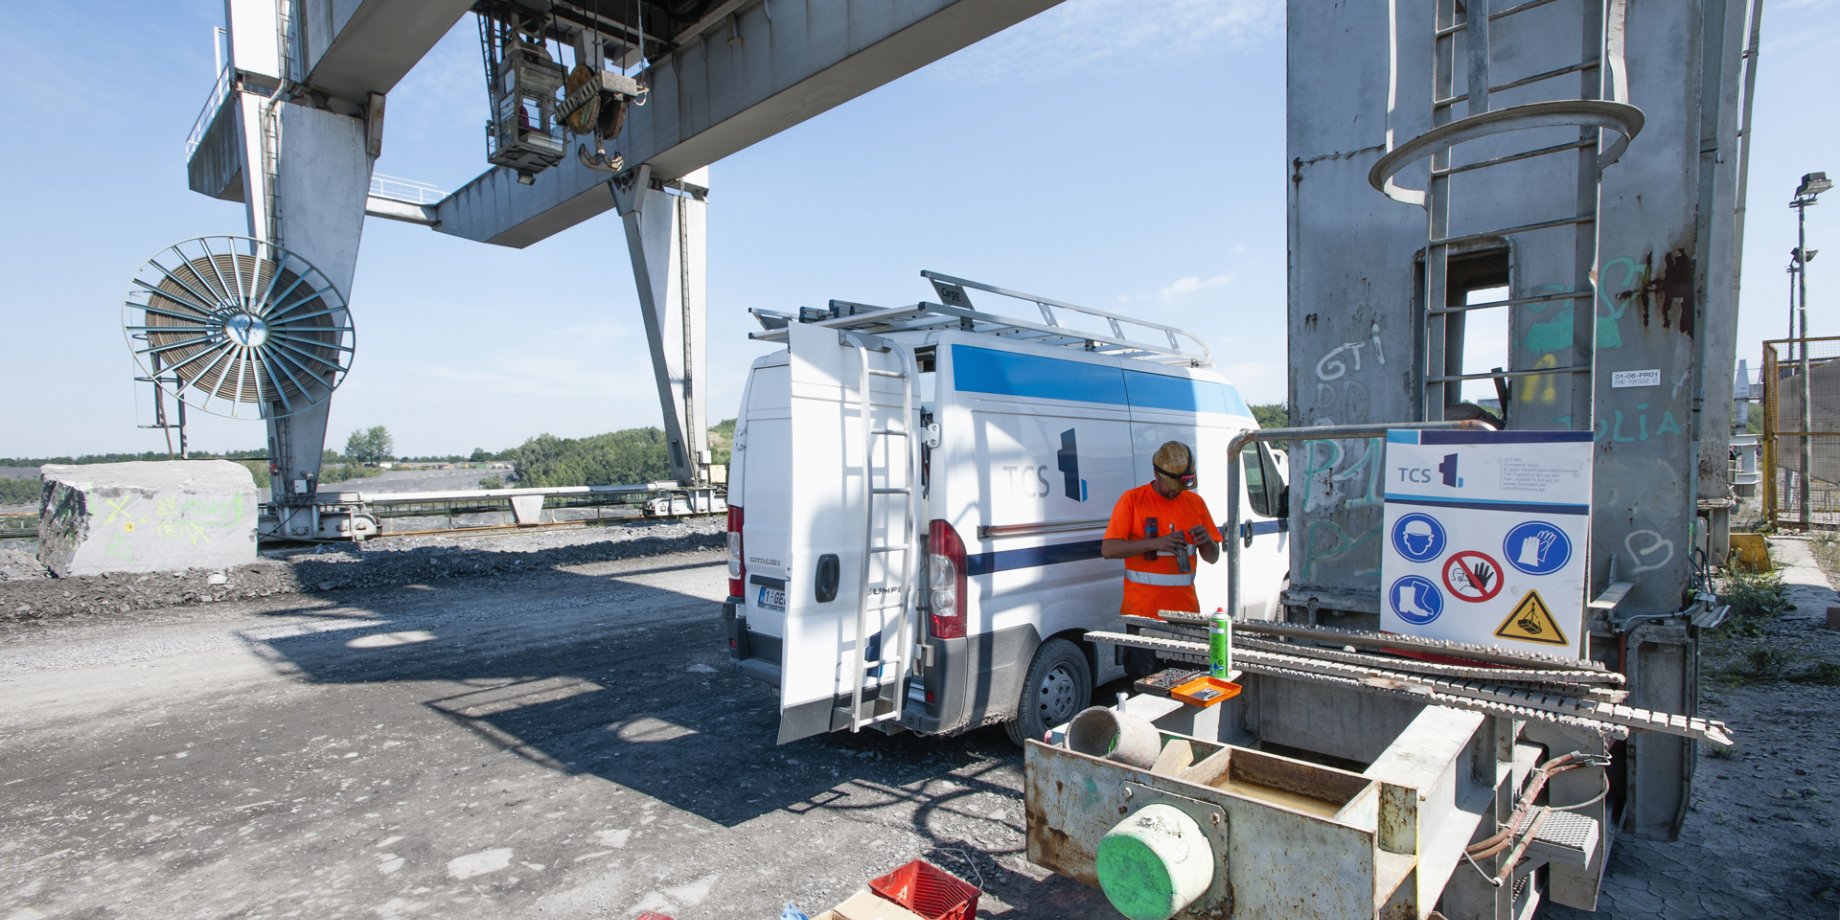 TCS_Timmers_Ponts roulants_Services ponts roulants_Hainaut